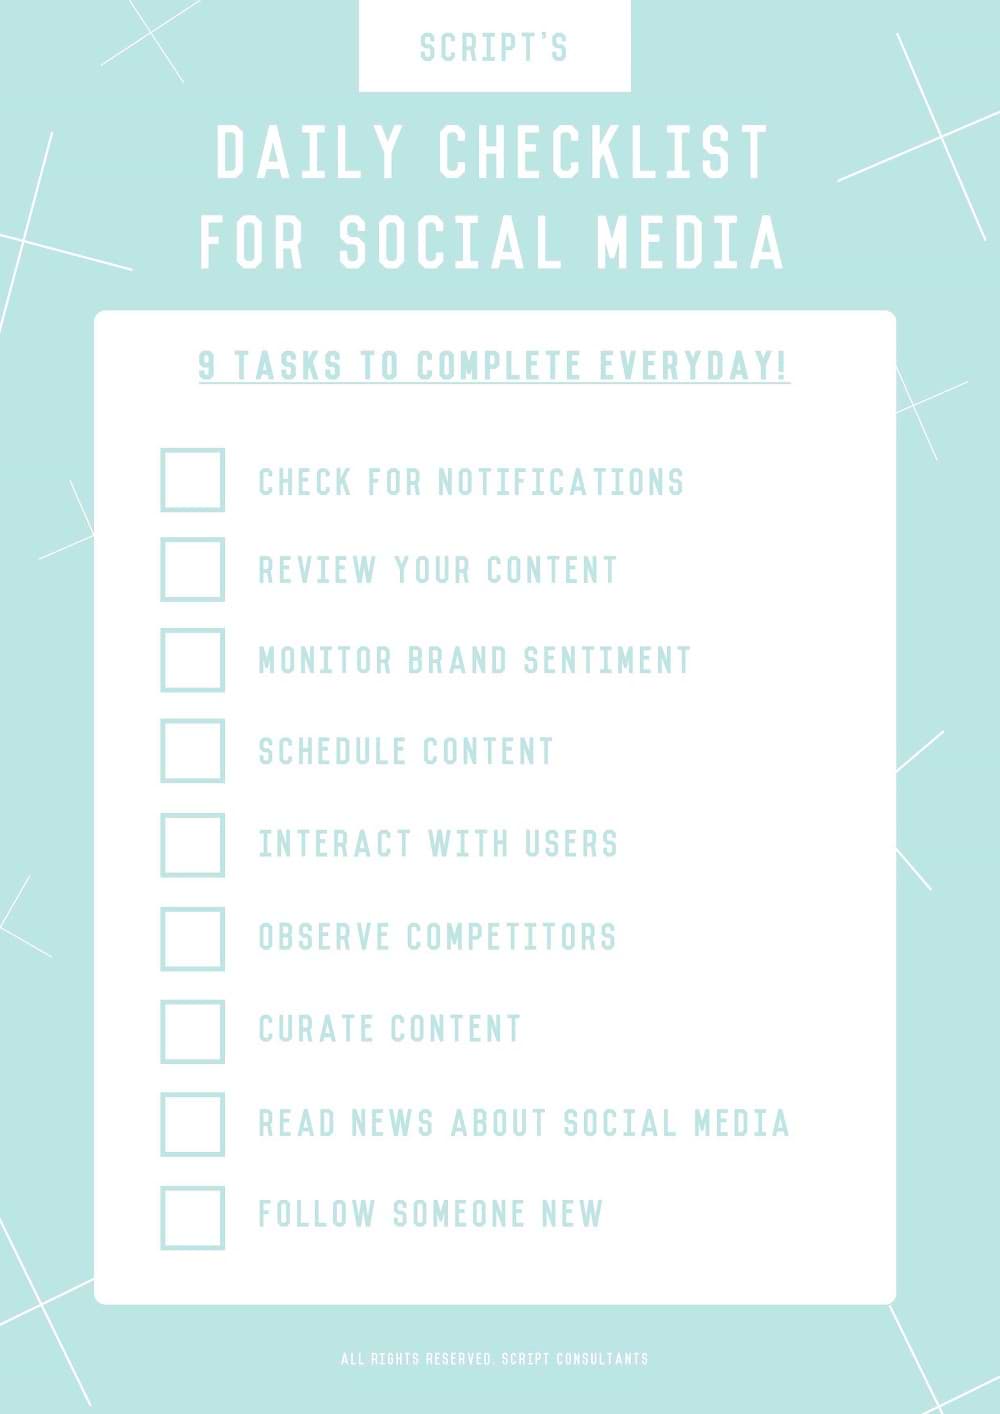 Daily Social Media Checklist